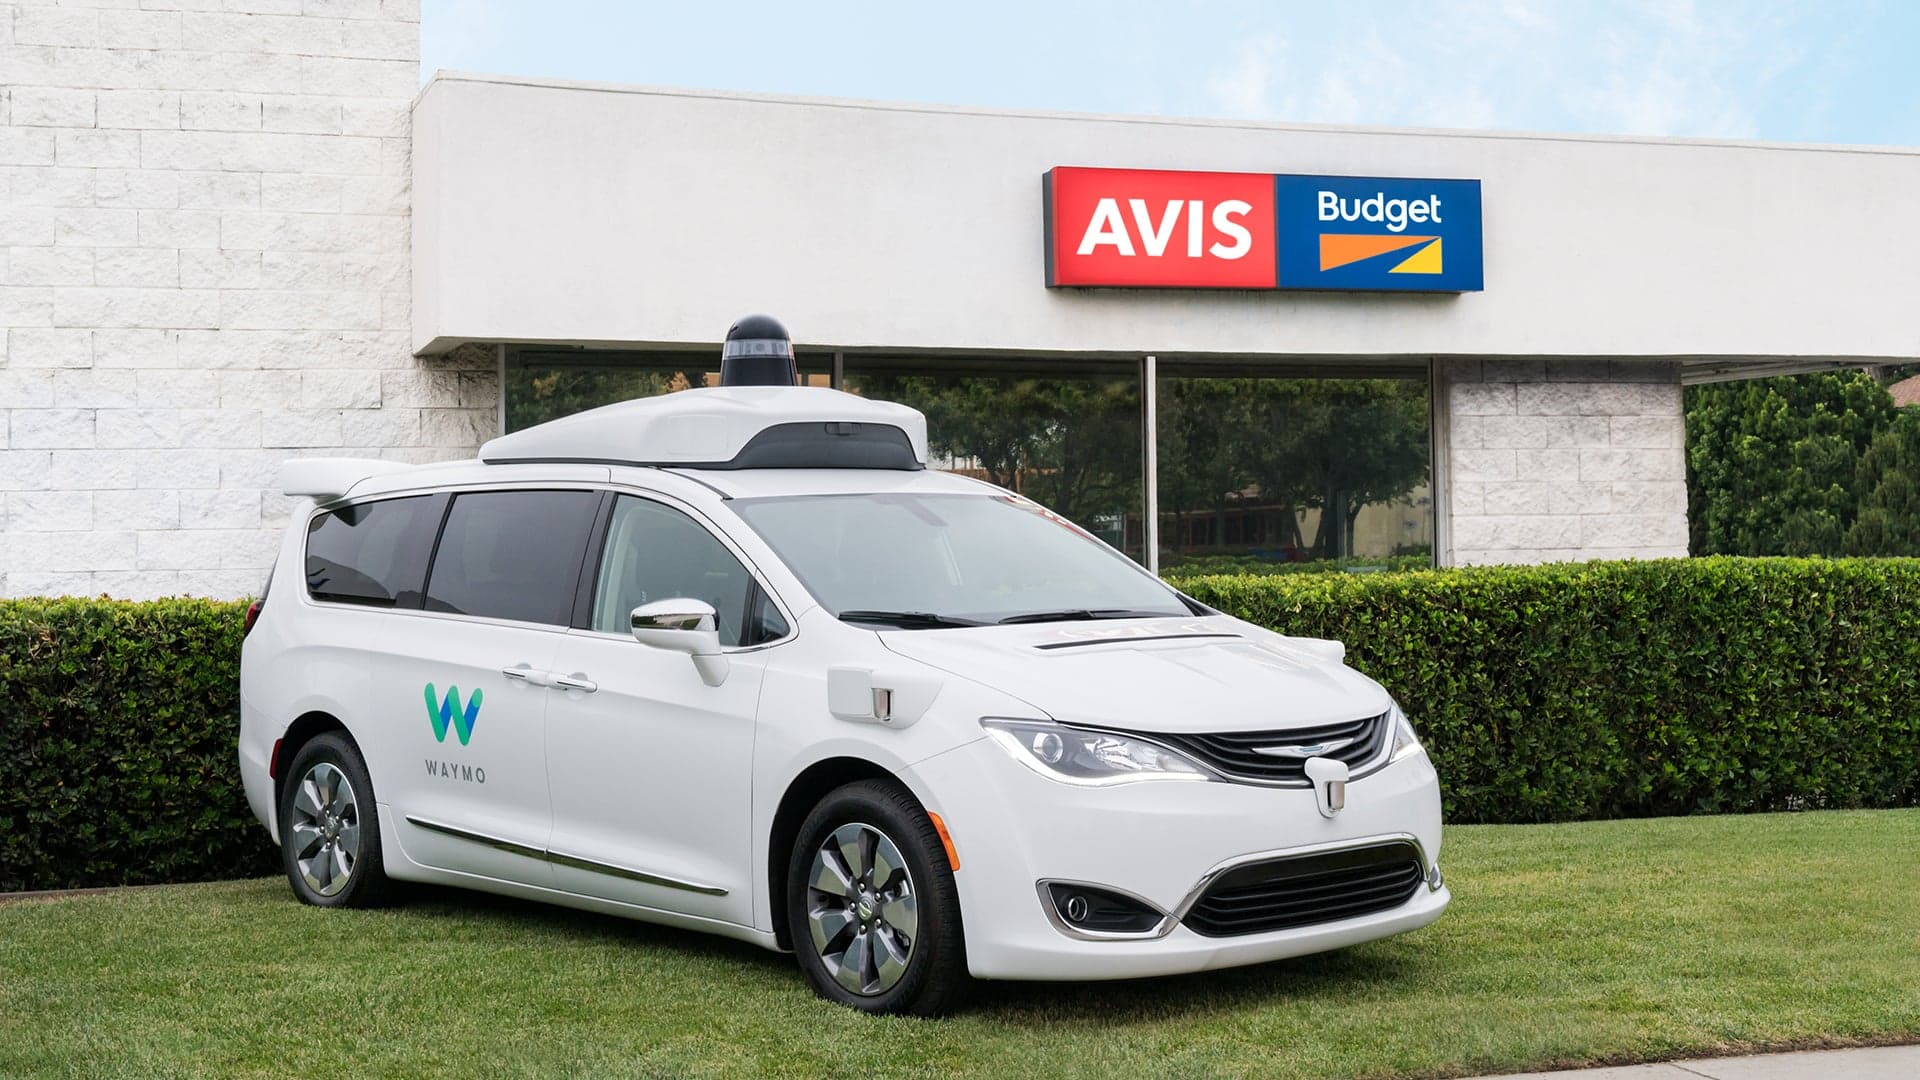 Google, Avis Sign Deal to Maintain Waymo’s Self-Driving Cars